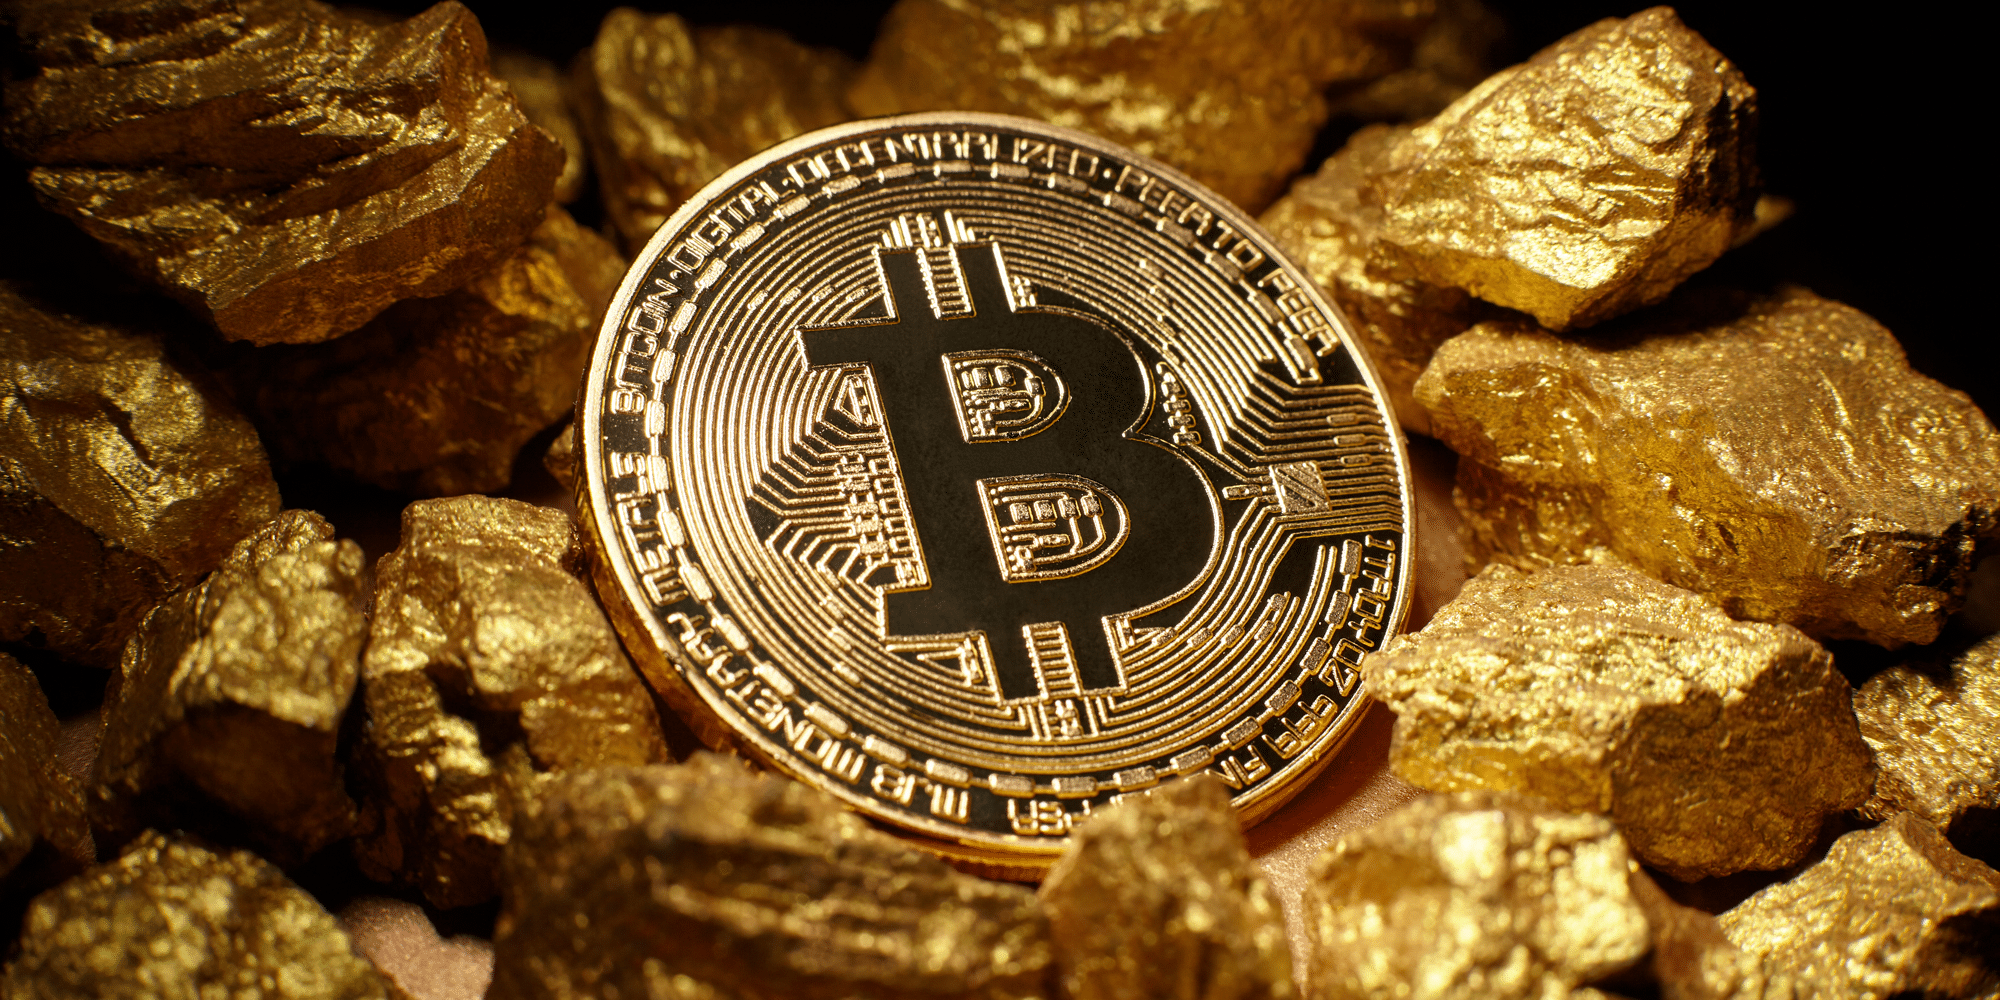 bitcoin gold nedir